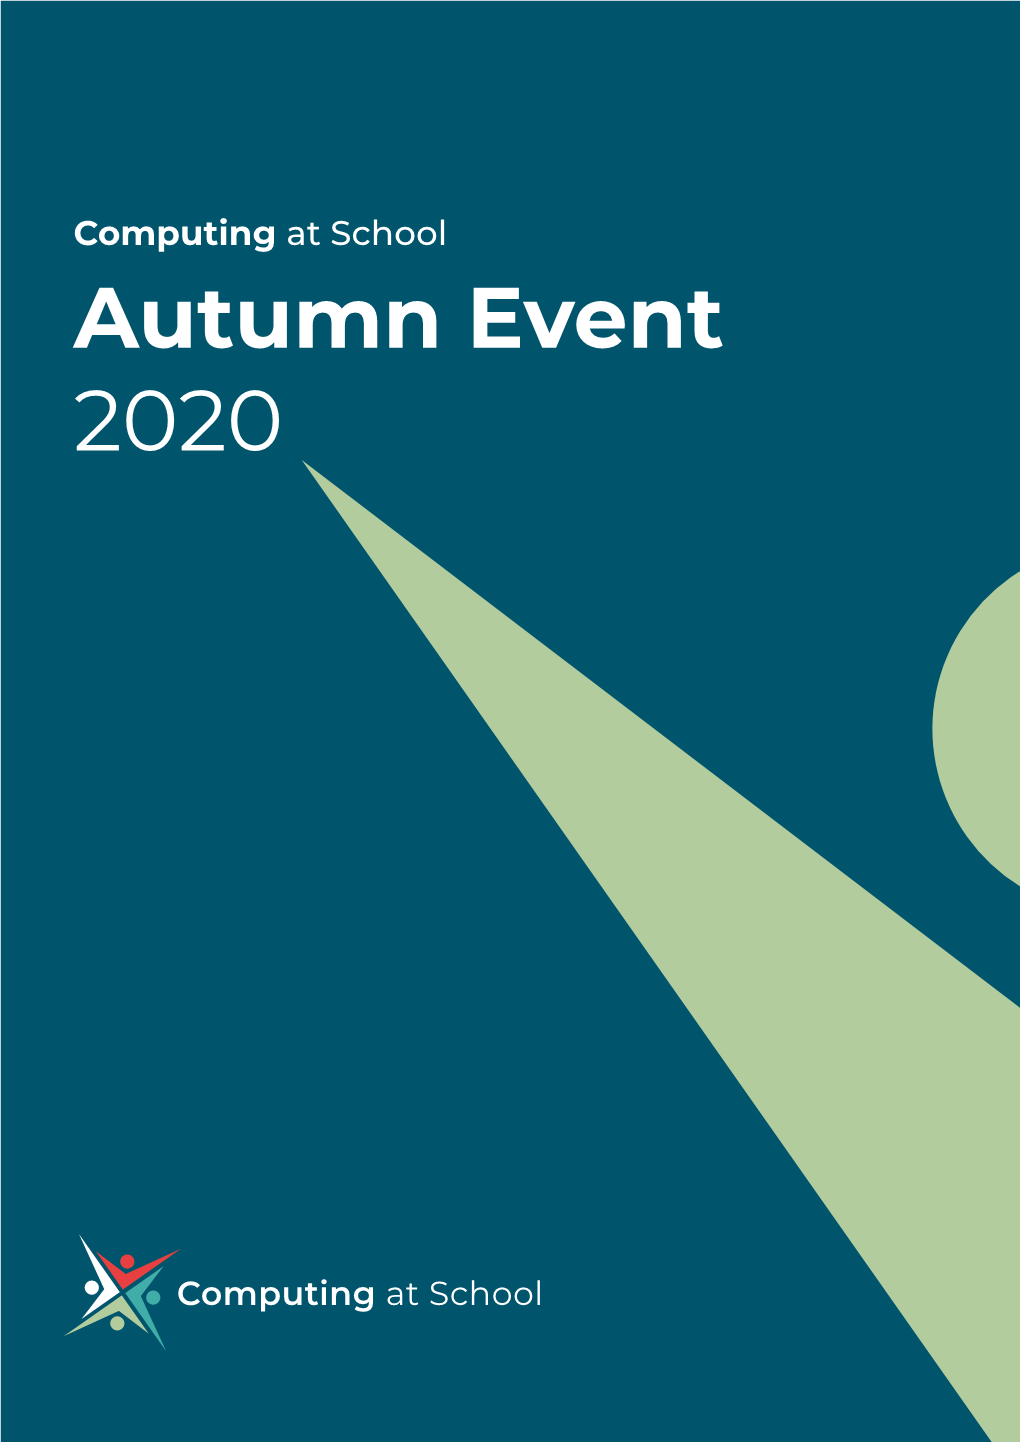 CAS Autumn Event Programme Here